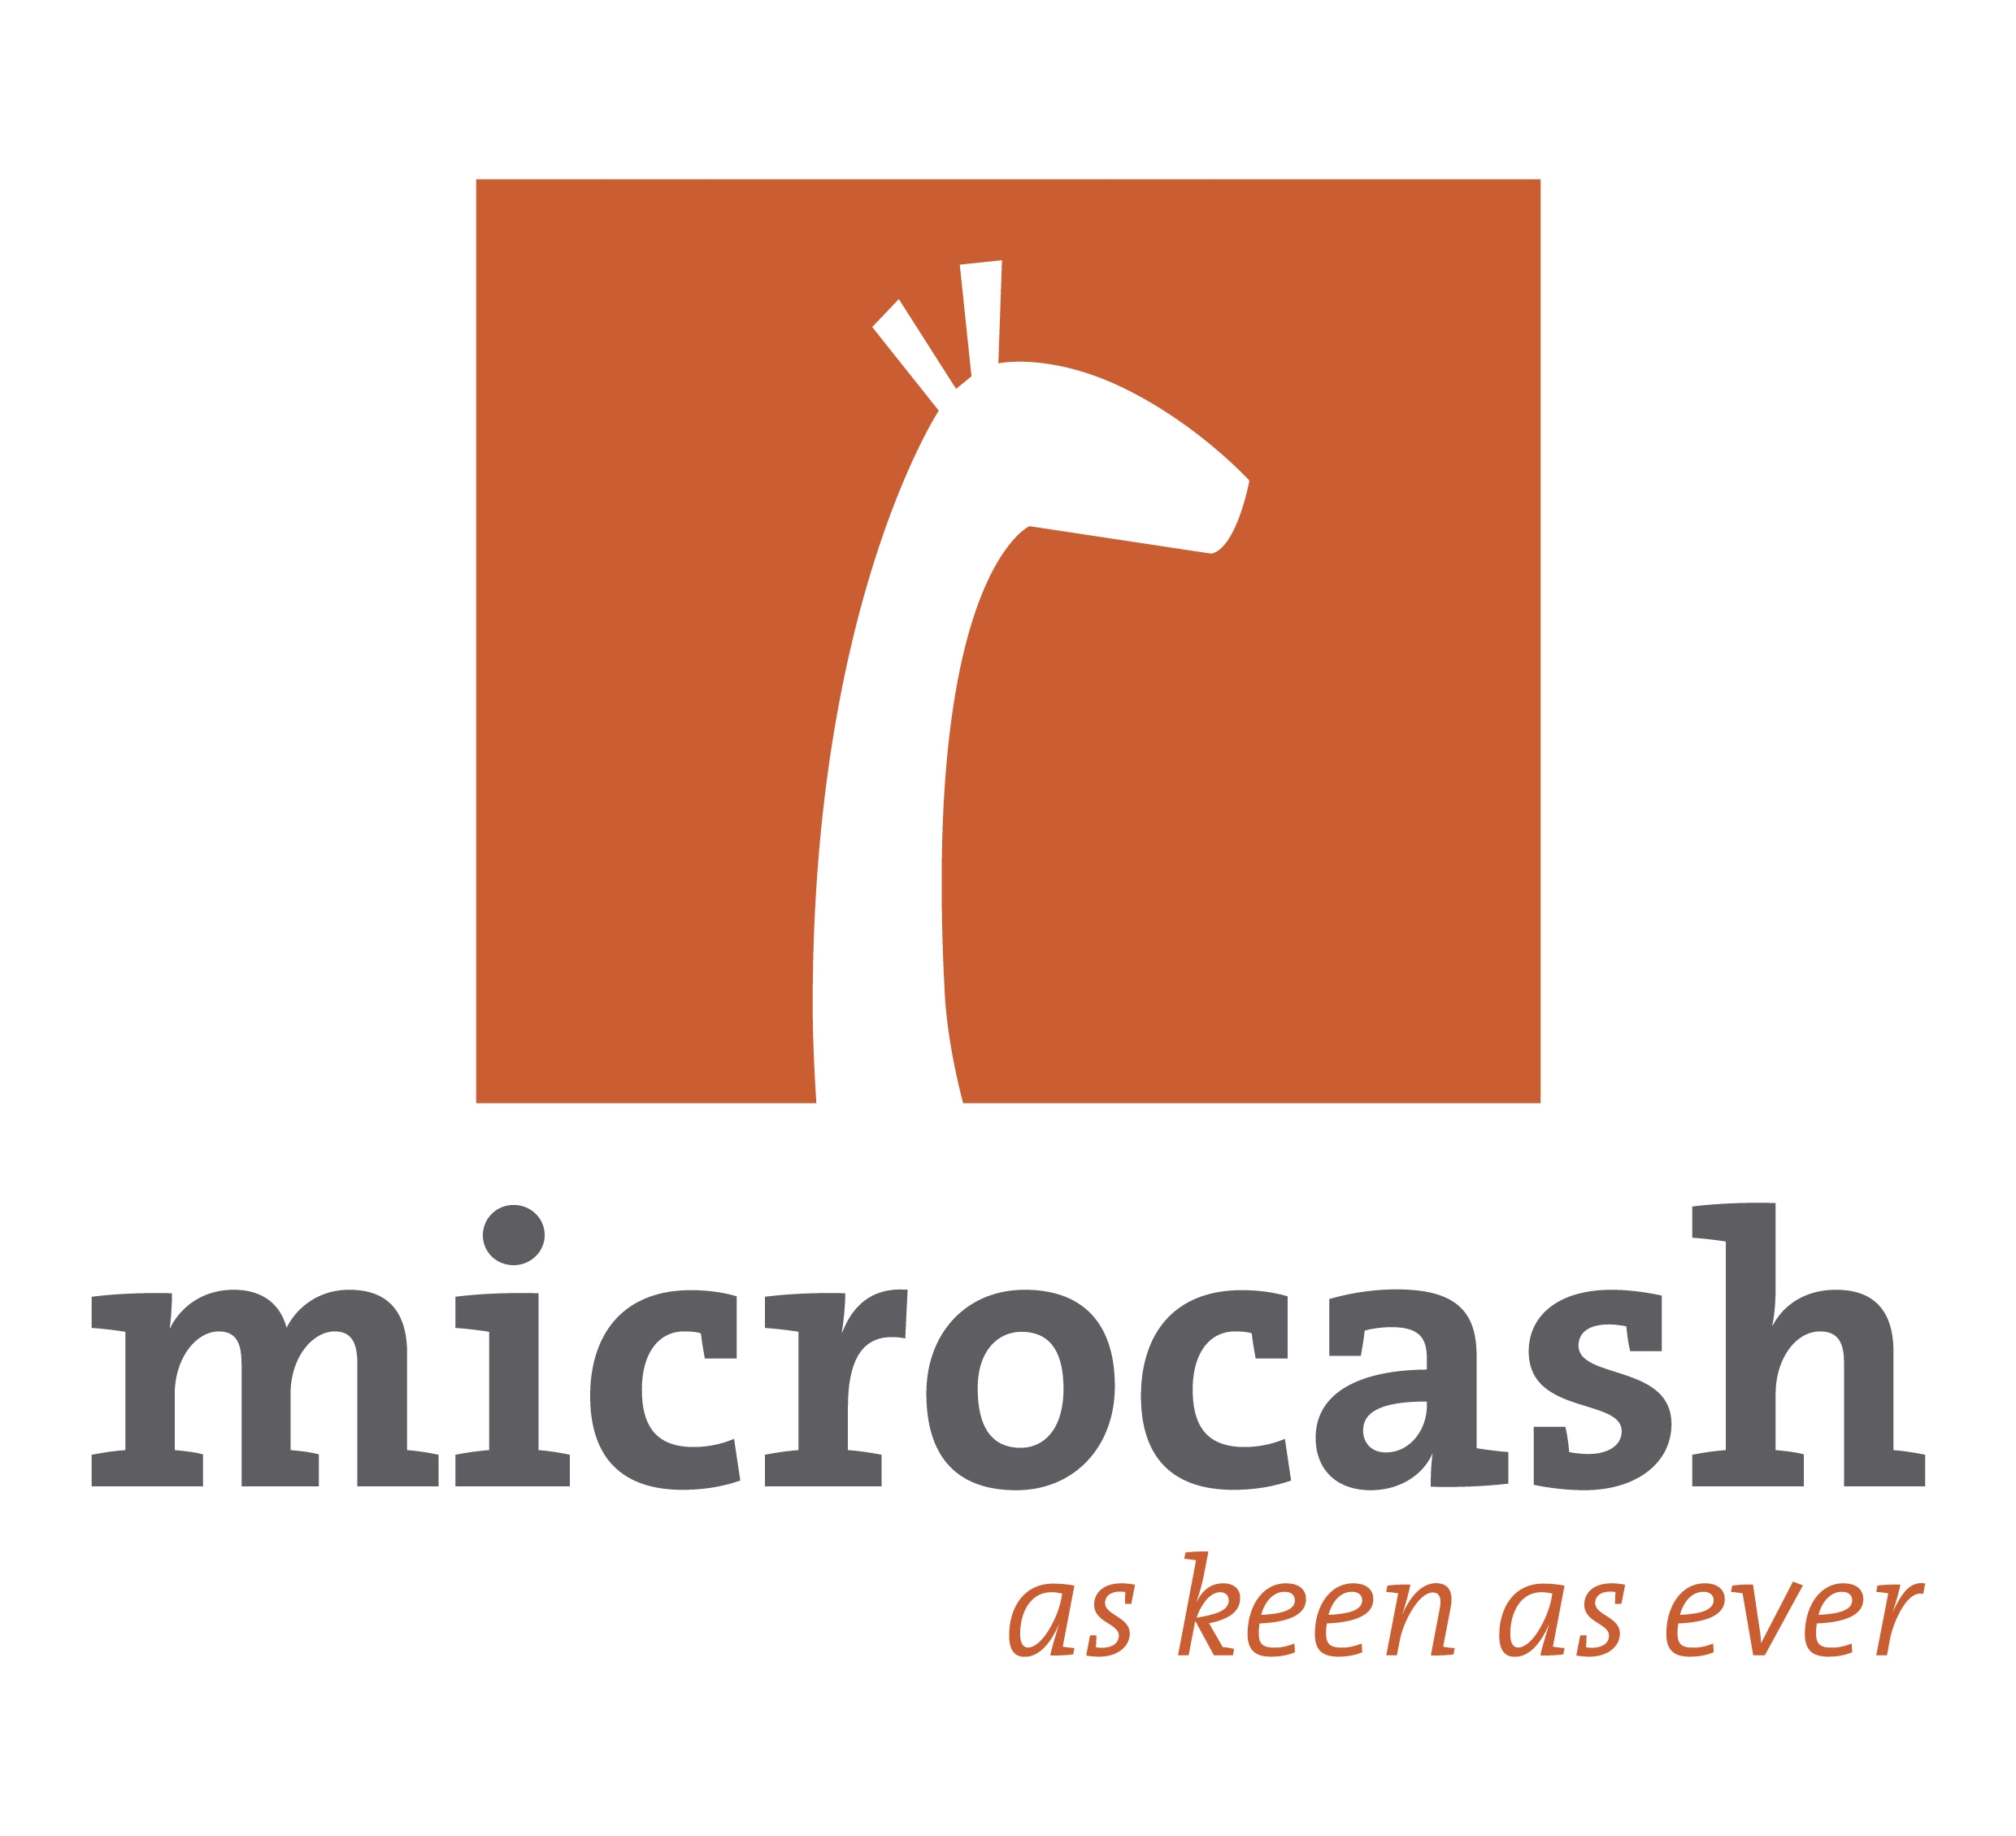 Microcash-logo_RGB